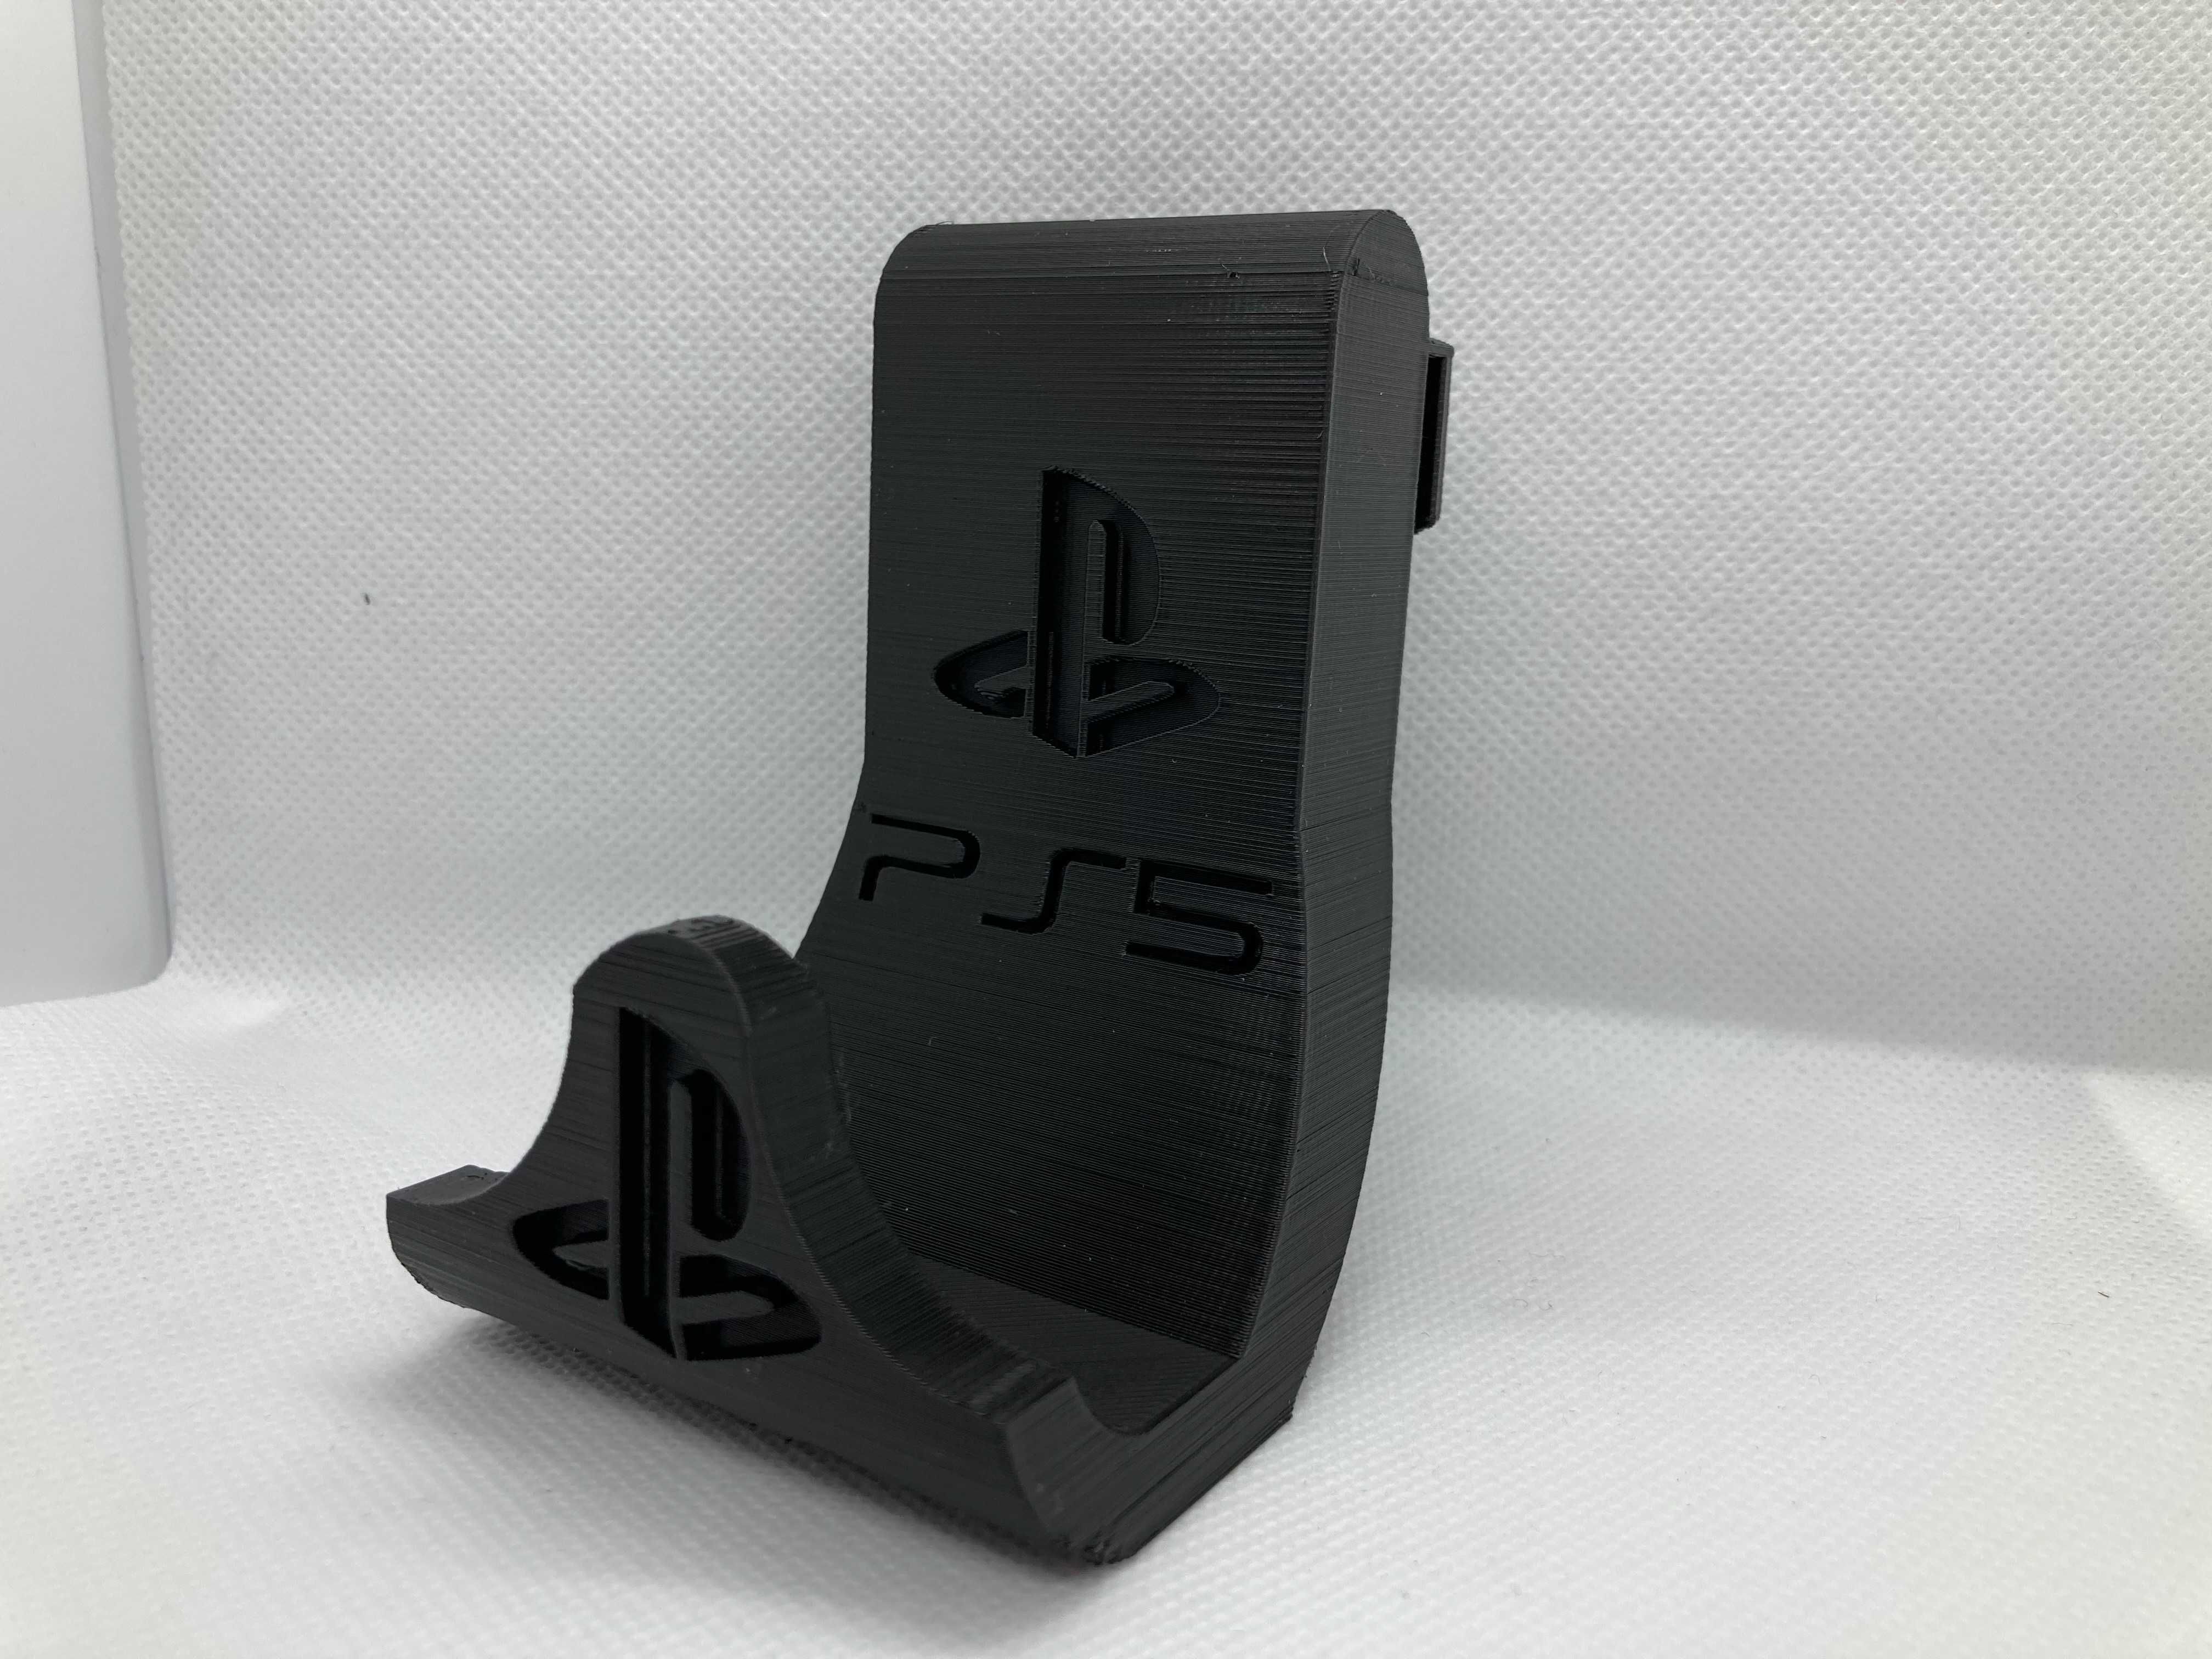 Zawieszka na pad PS5, druk 3D czarna, biała, niebieska